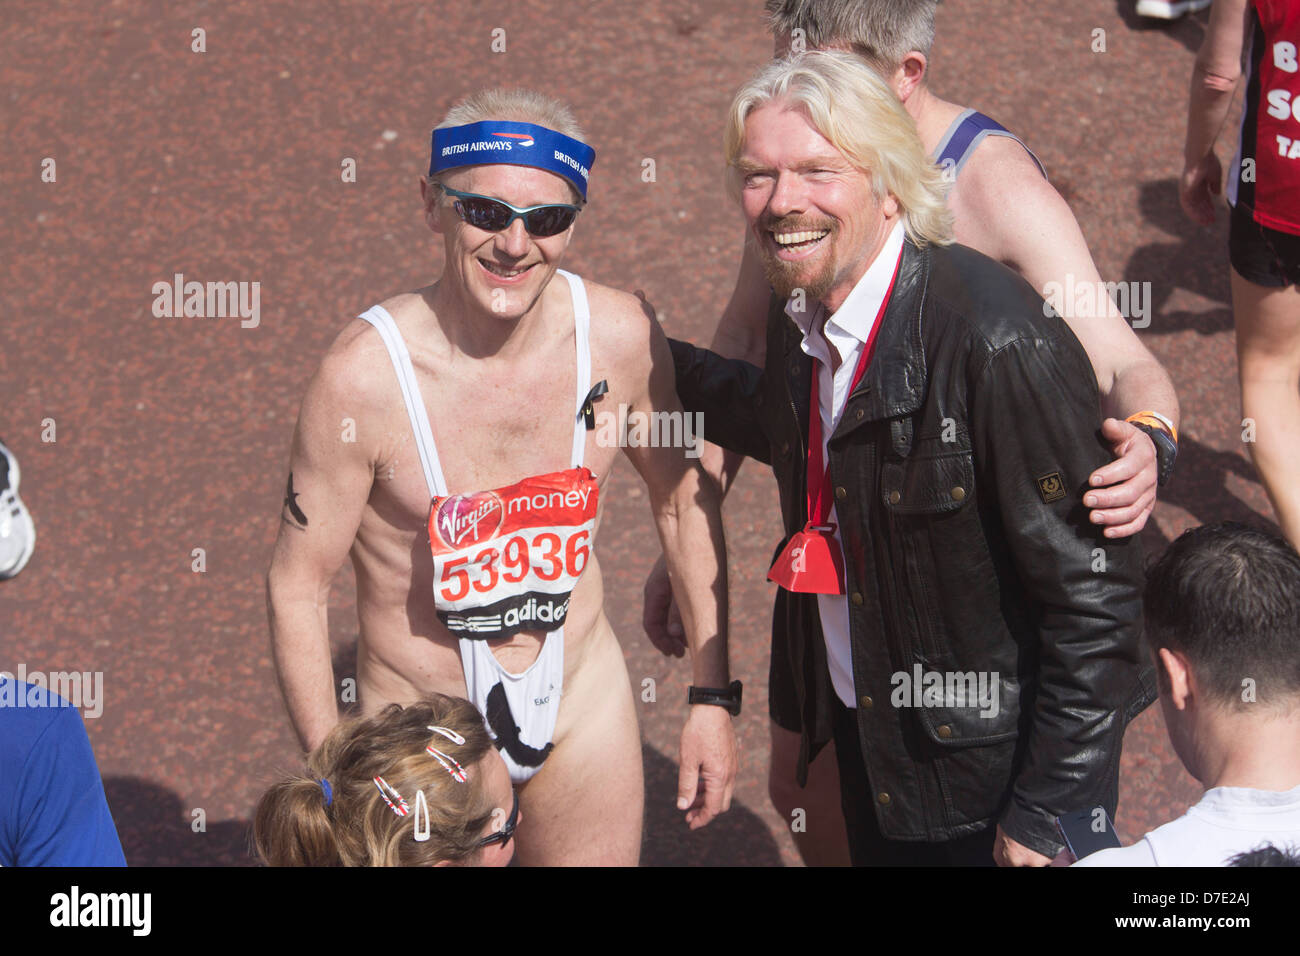 Virgin London Marathon 2013, Sir Richard Branson with runner in a mankini and a British Airways bandana Stock Photo